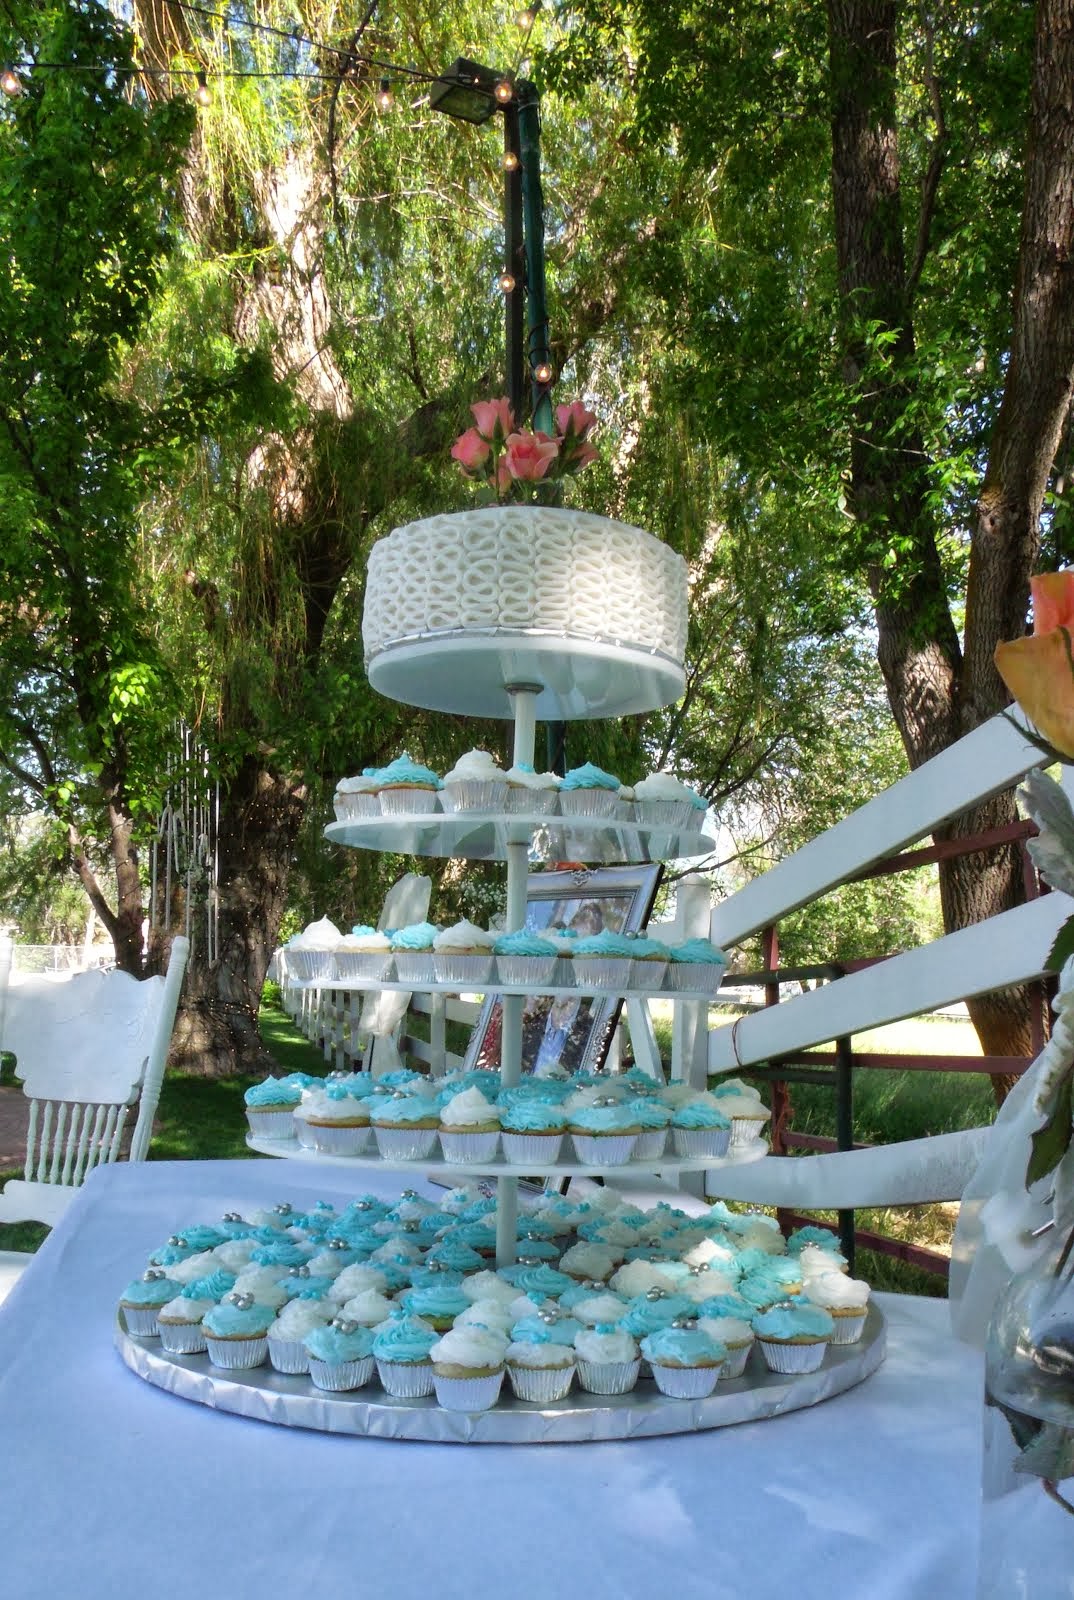 Kelsey's Cup Cake Wedding Cake